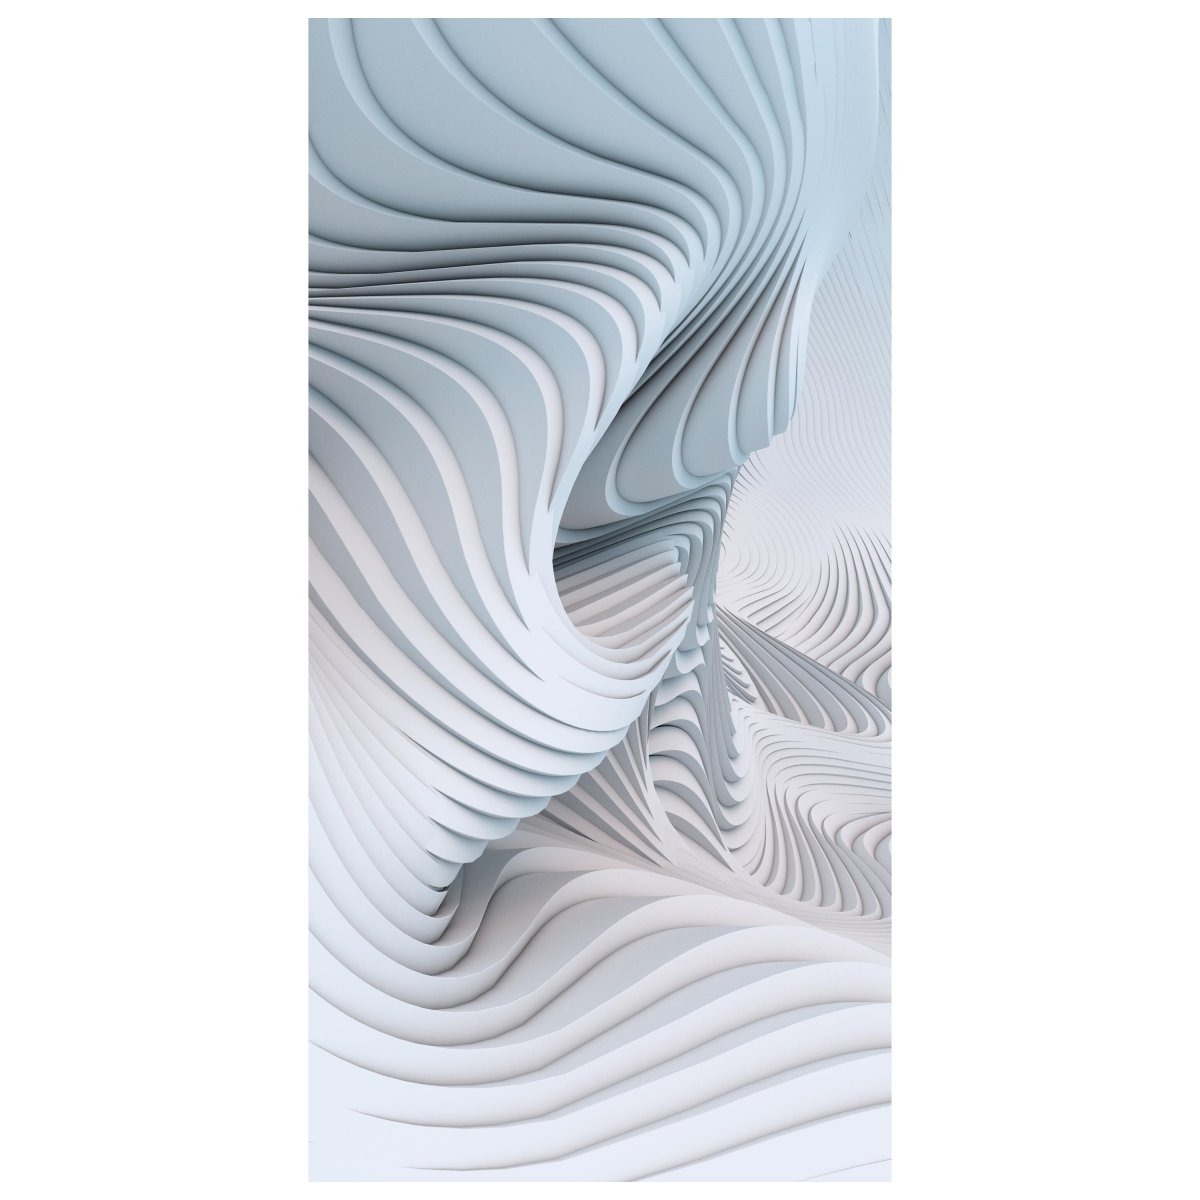 Türtapete Abstrakte Wellen, 3D Effekt, modern M1090 - Bild 2